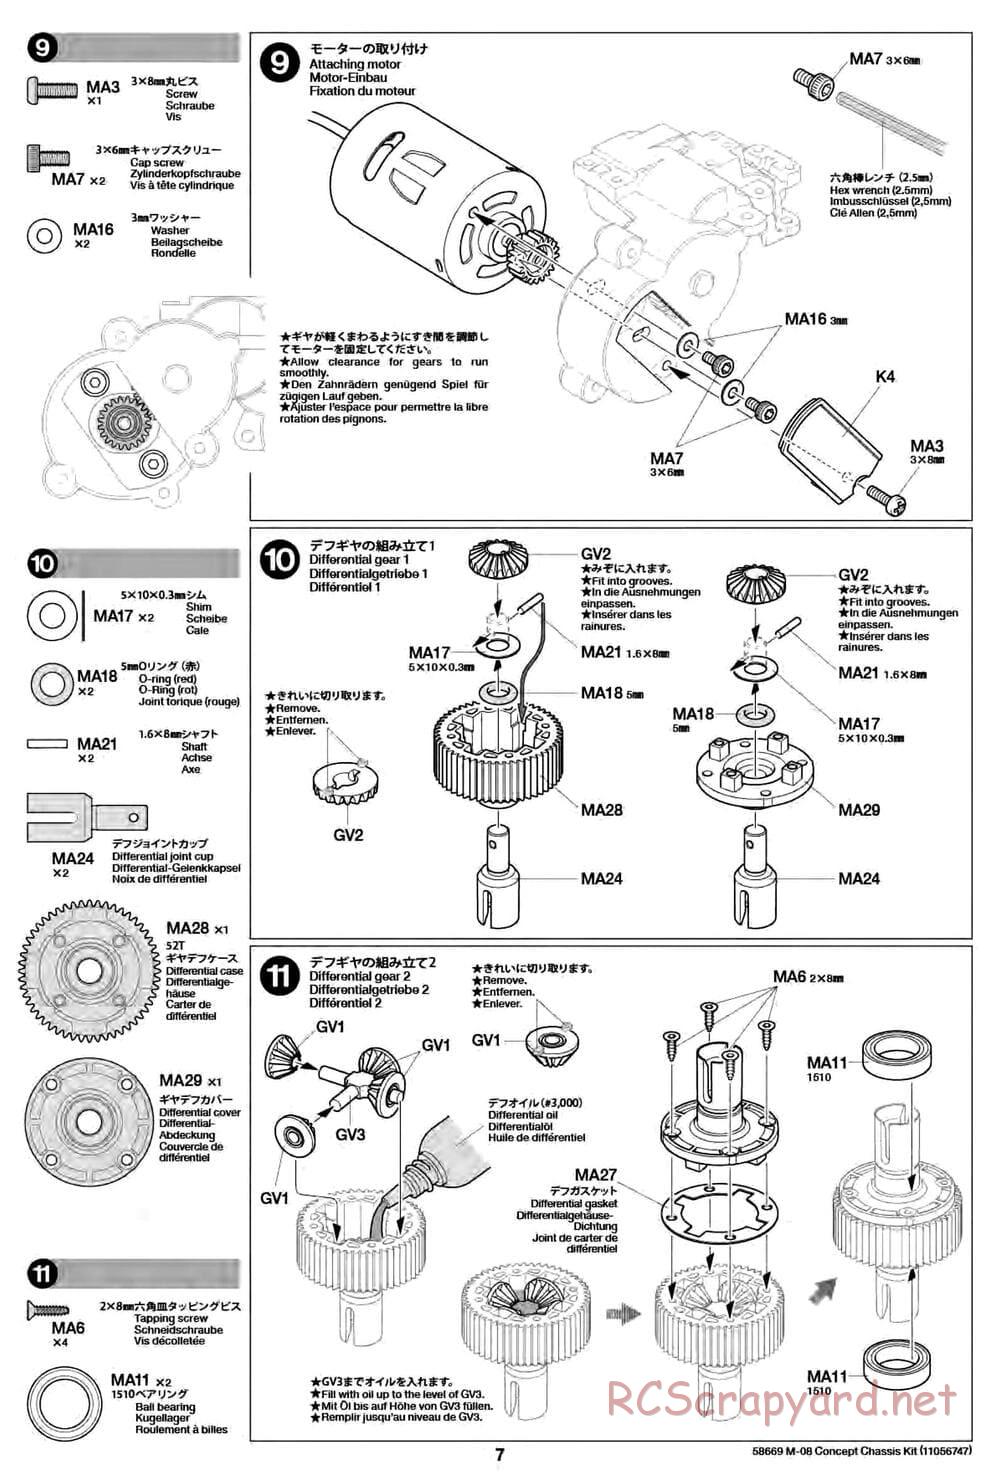 Tamiya - M-08 Concept Chassis - Manual - Page 7